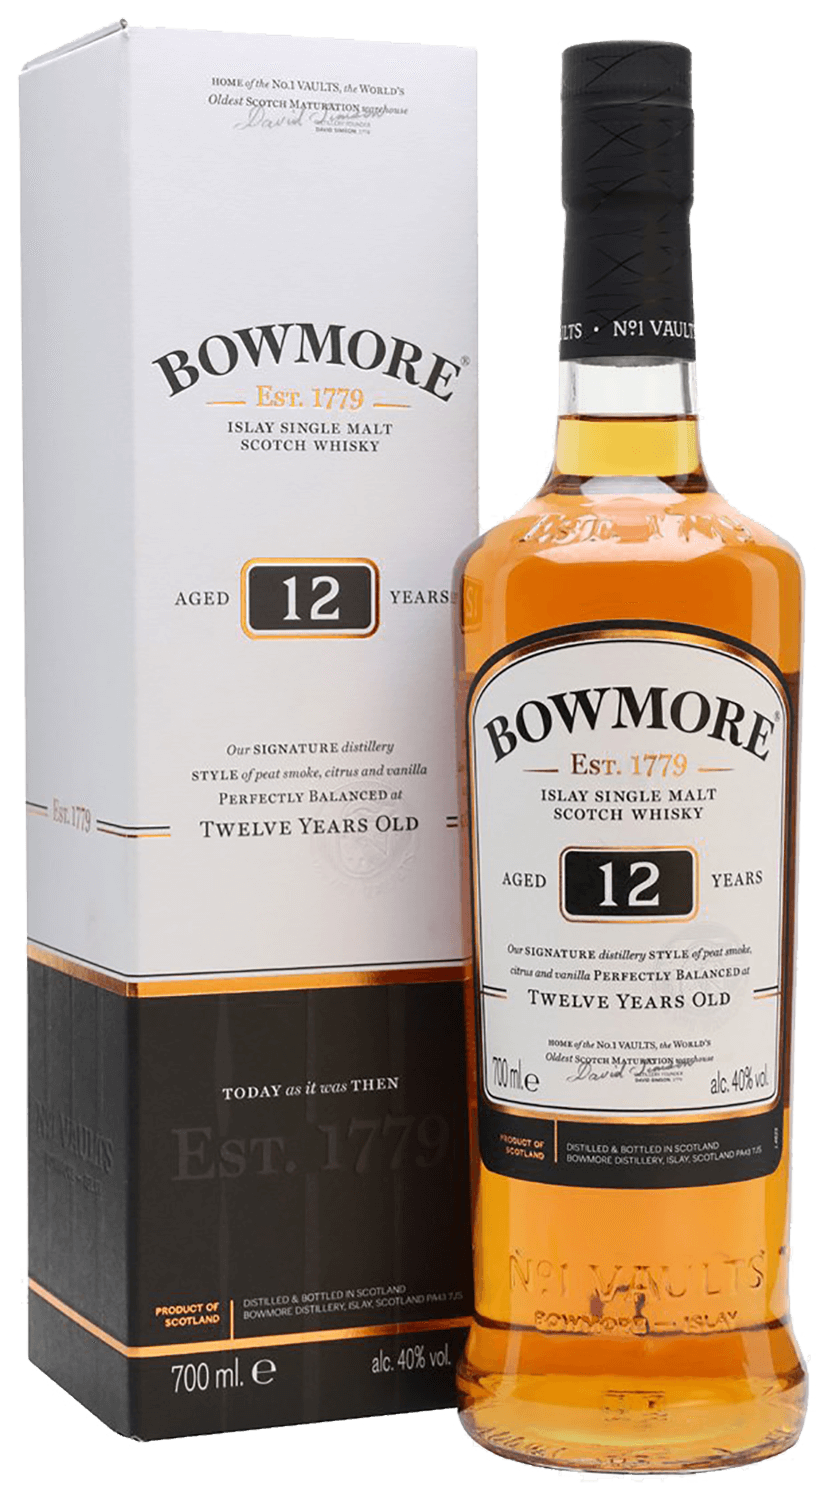 Bowmore Islay Single Malt Scotch Whisky 12 y.o. (gift box) bunnahabhain aonadh islay single malt scotch whisky